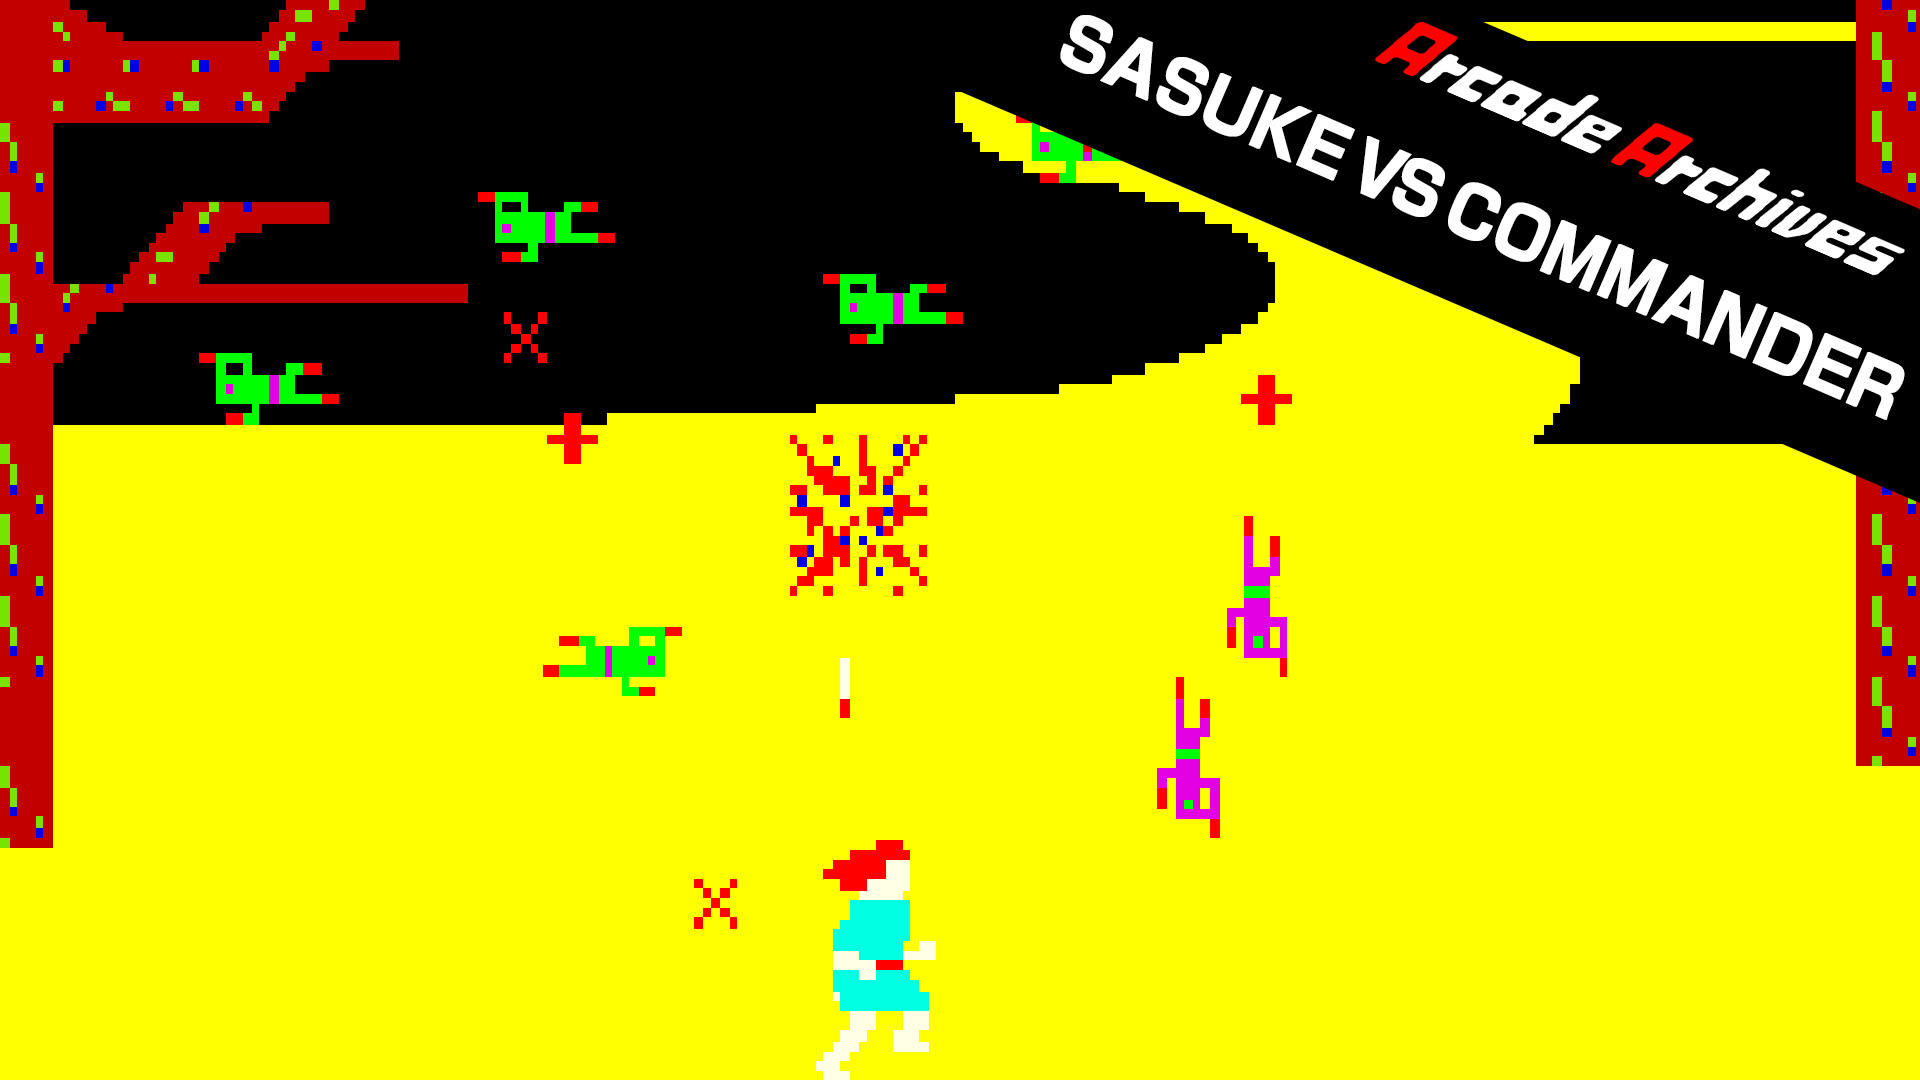 Arcade Archives SASUKE VS COMMANDER